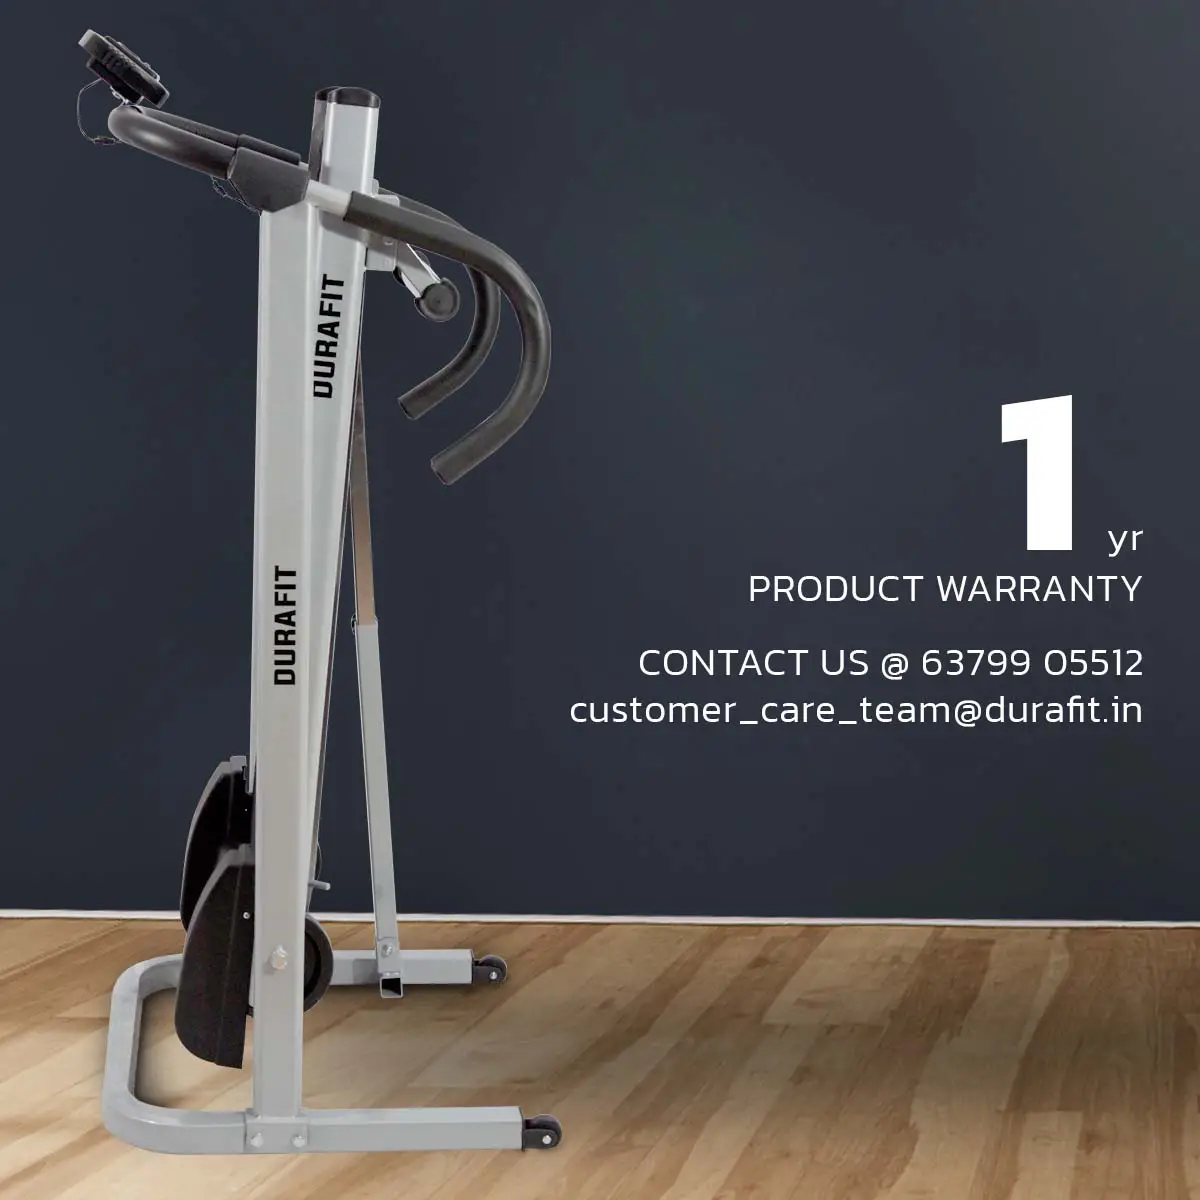 Durafit Manual Treadmill Hmt01 with 1year product warranty